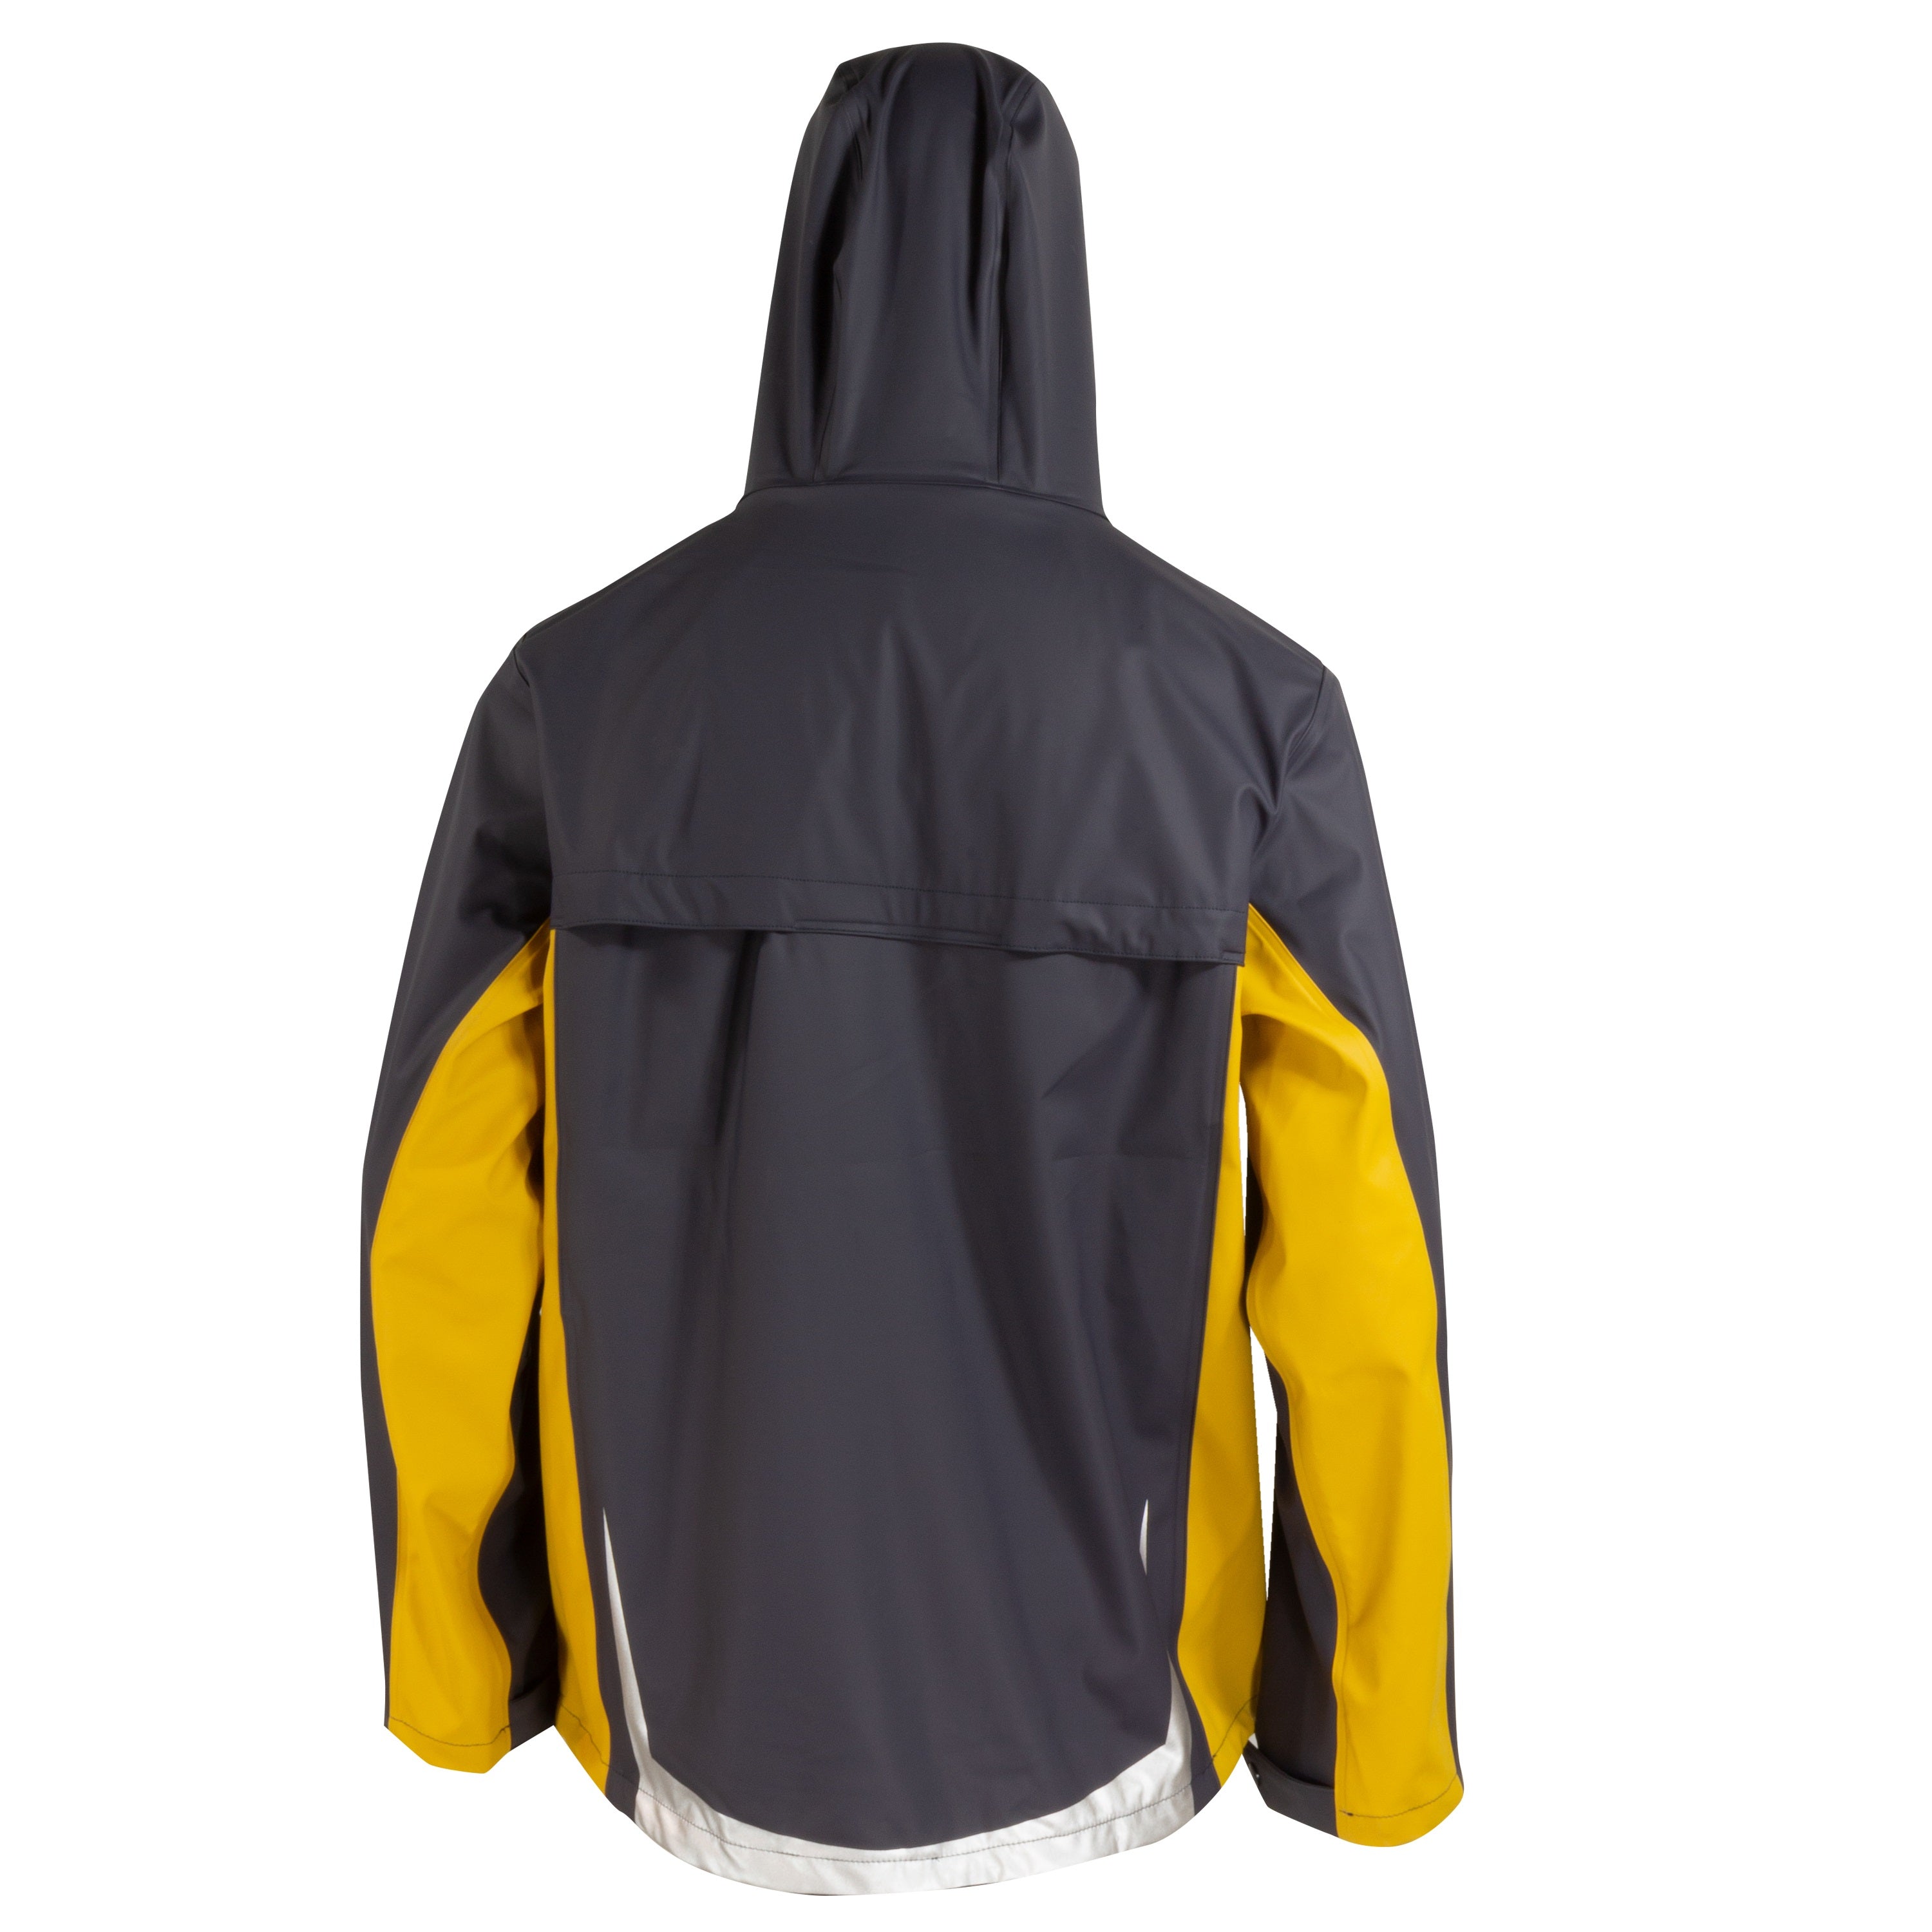 Manteau imperméable 2 tons - Homme||Rain jacket 2 shades - Men’s